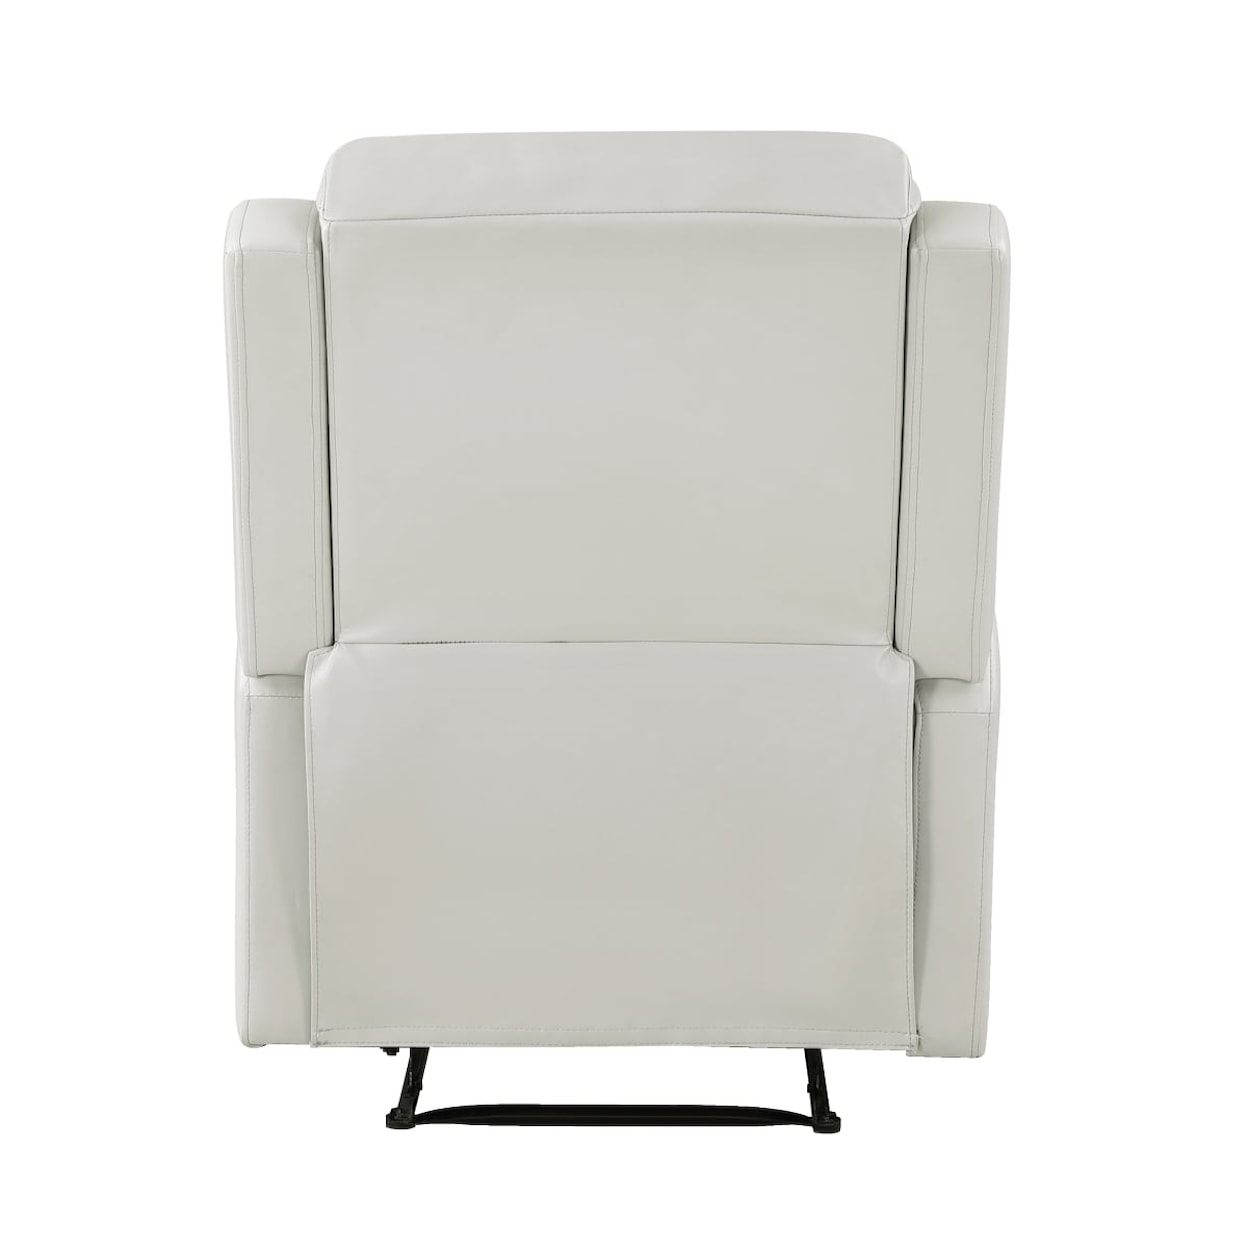 Homelegance Furniture Durant Reclining Chair